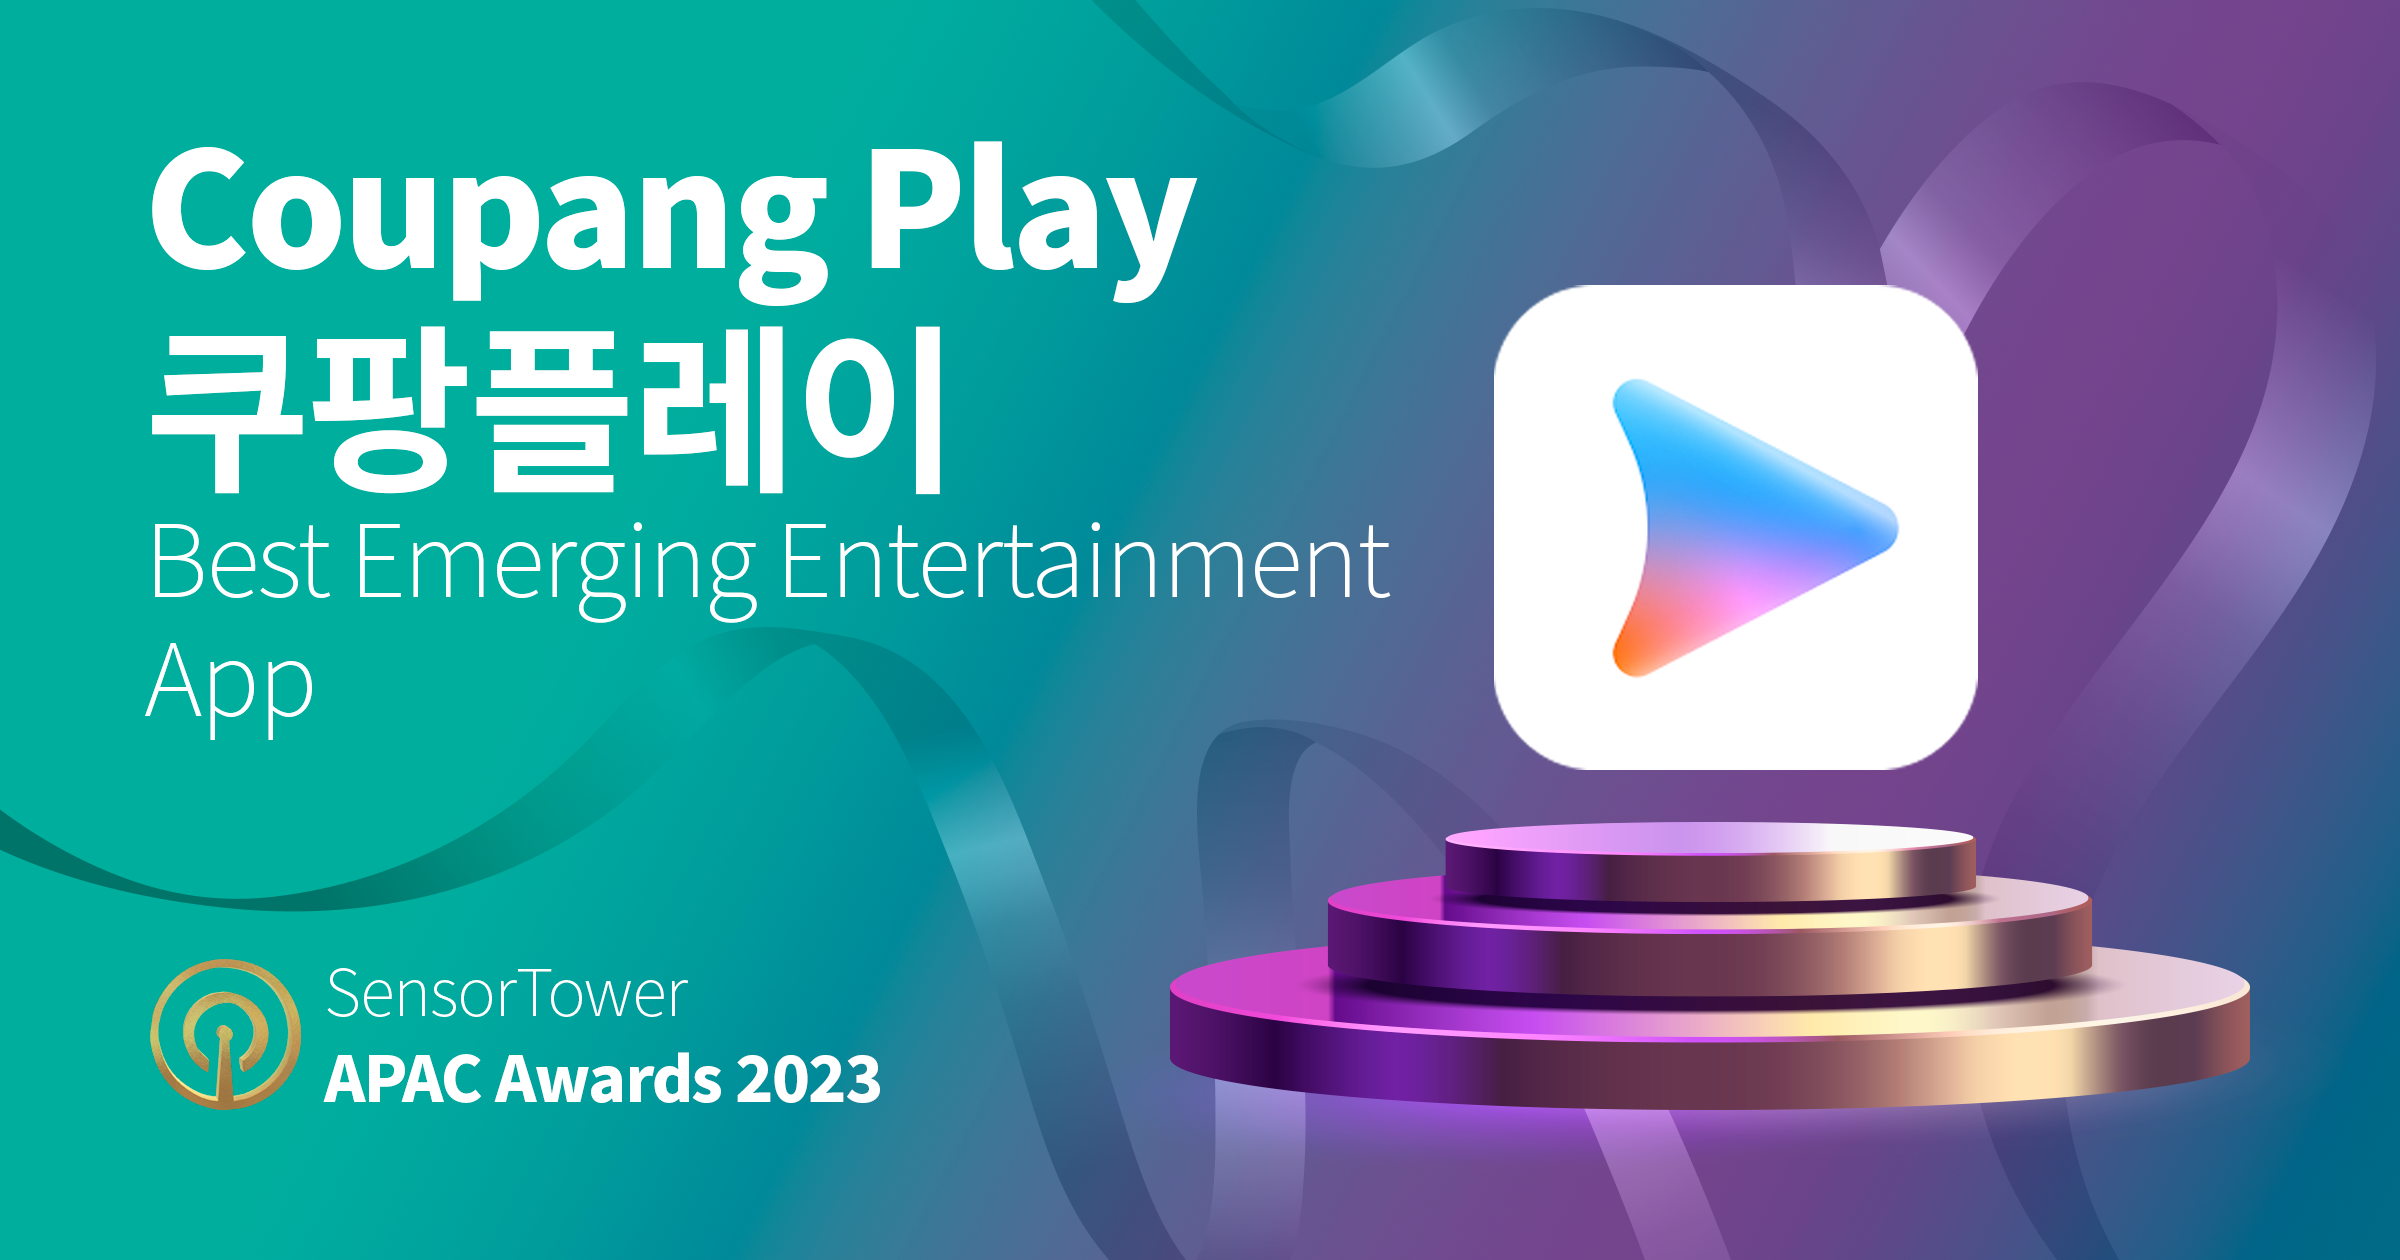 Coupang Play (Best Emerging Entertainment App)